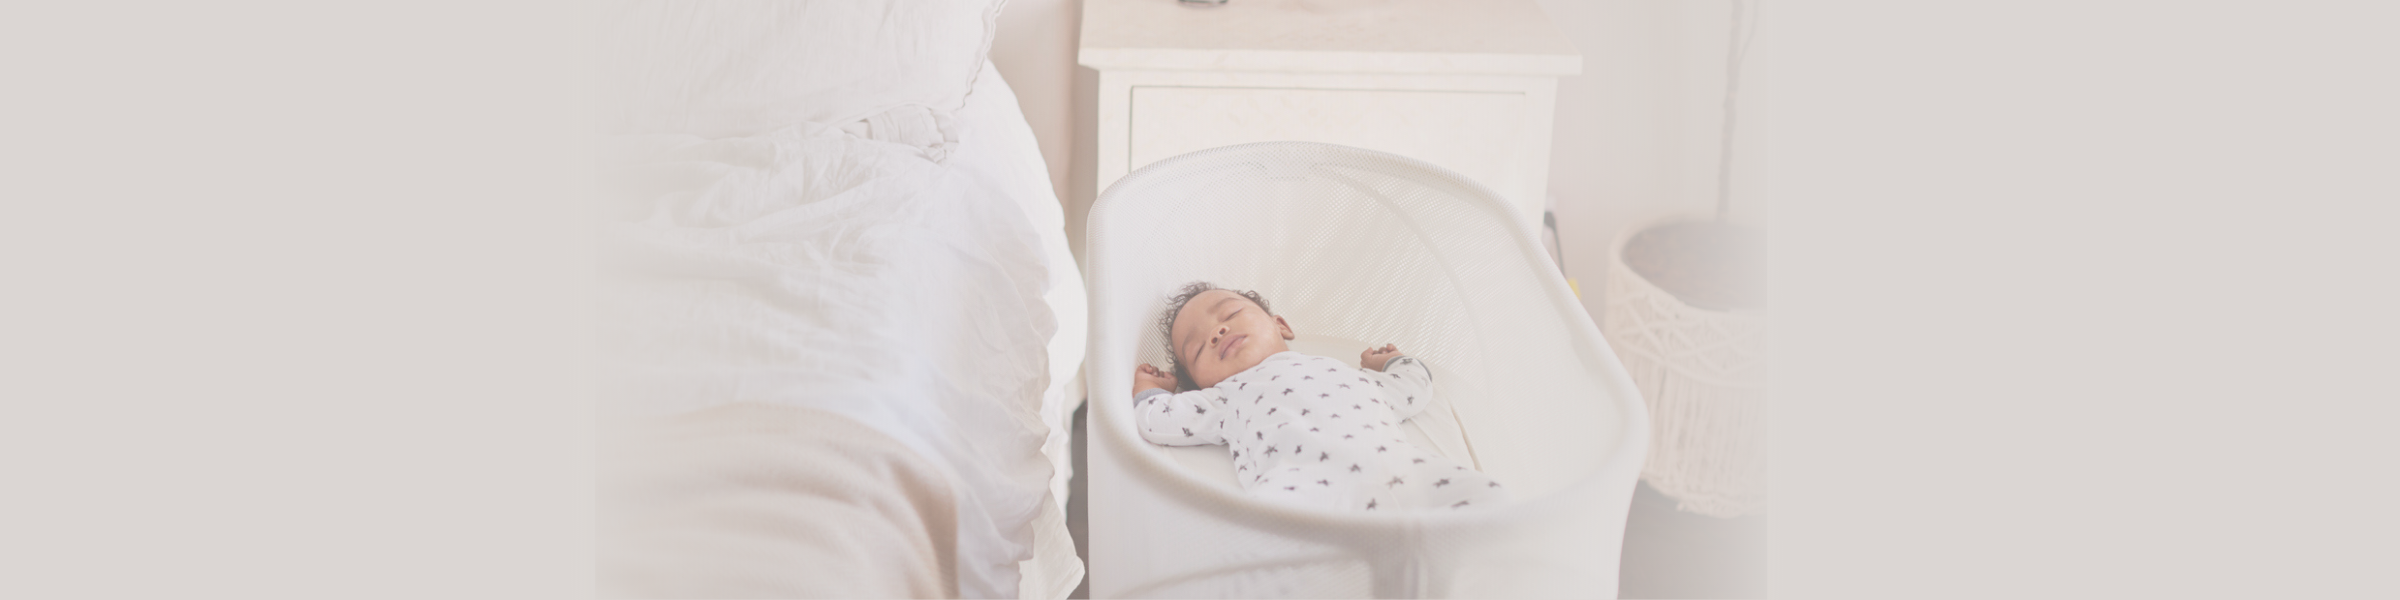 Baby Sleeping in crib